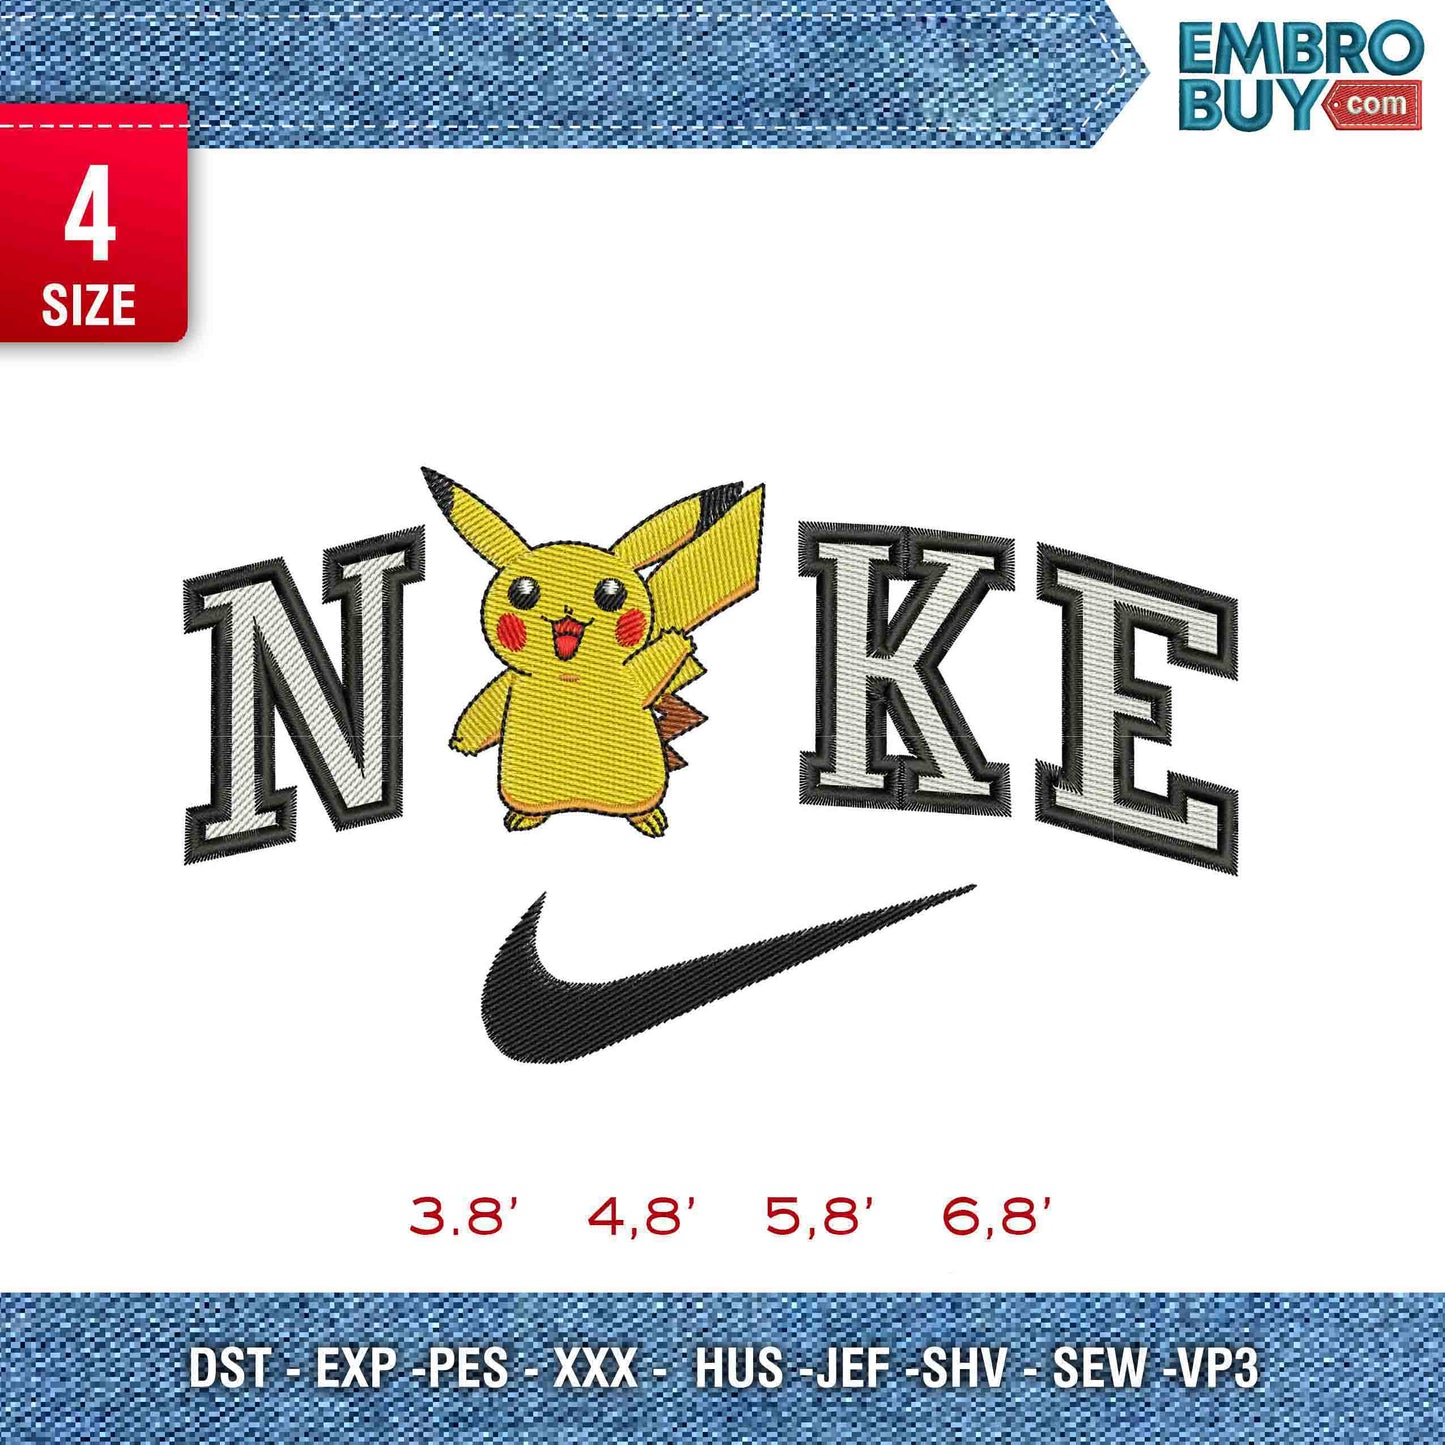 Nike Squirrel yellow